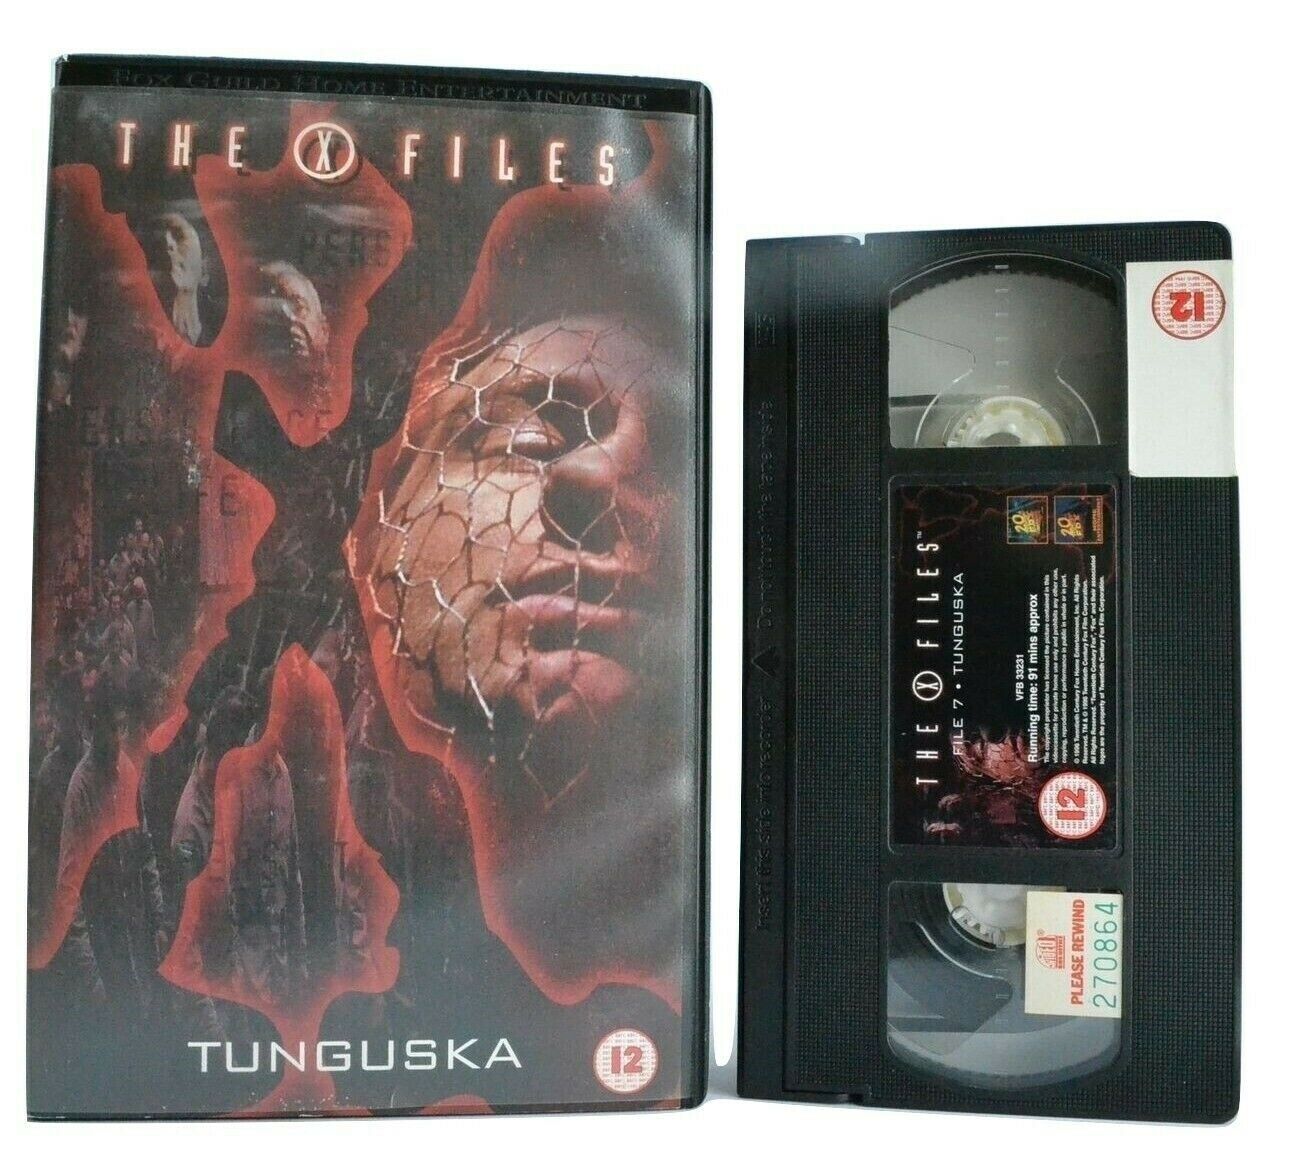 The X-Files: Tunguska (1996) - Sci-Fi TV Series - Large Box - Ex-Rental - VHS-